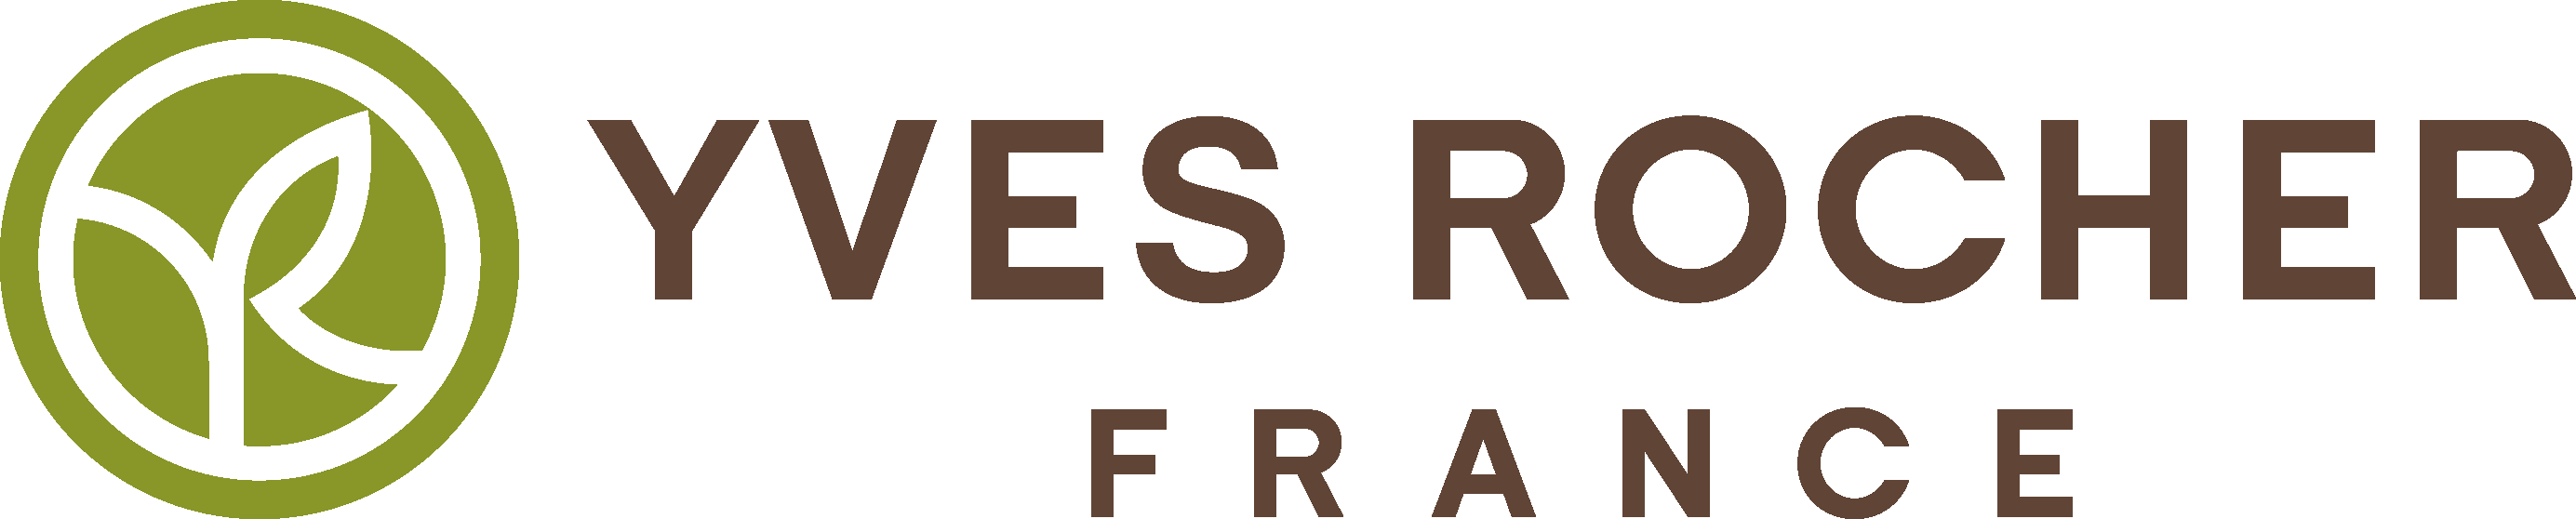 Yves Rocher Logo png